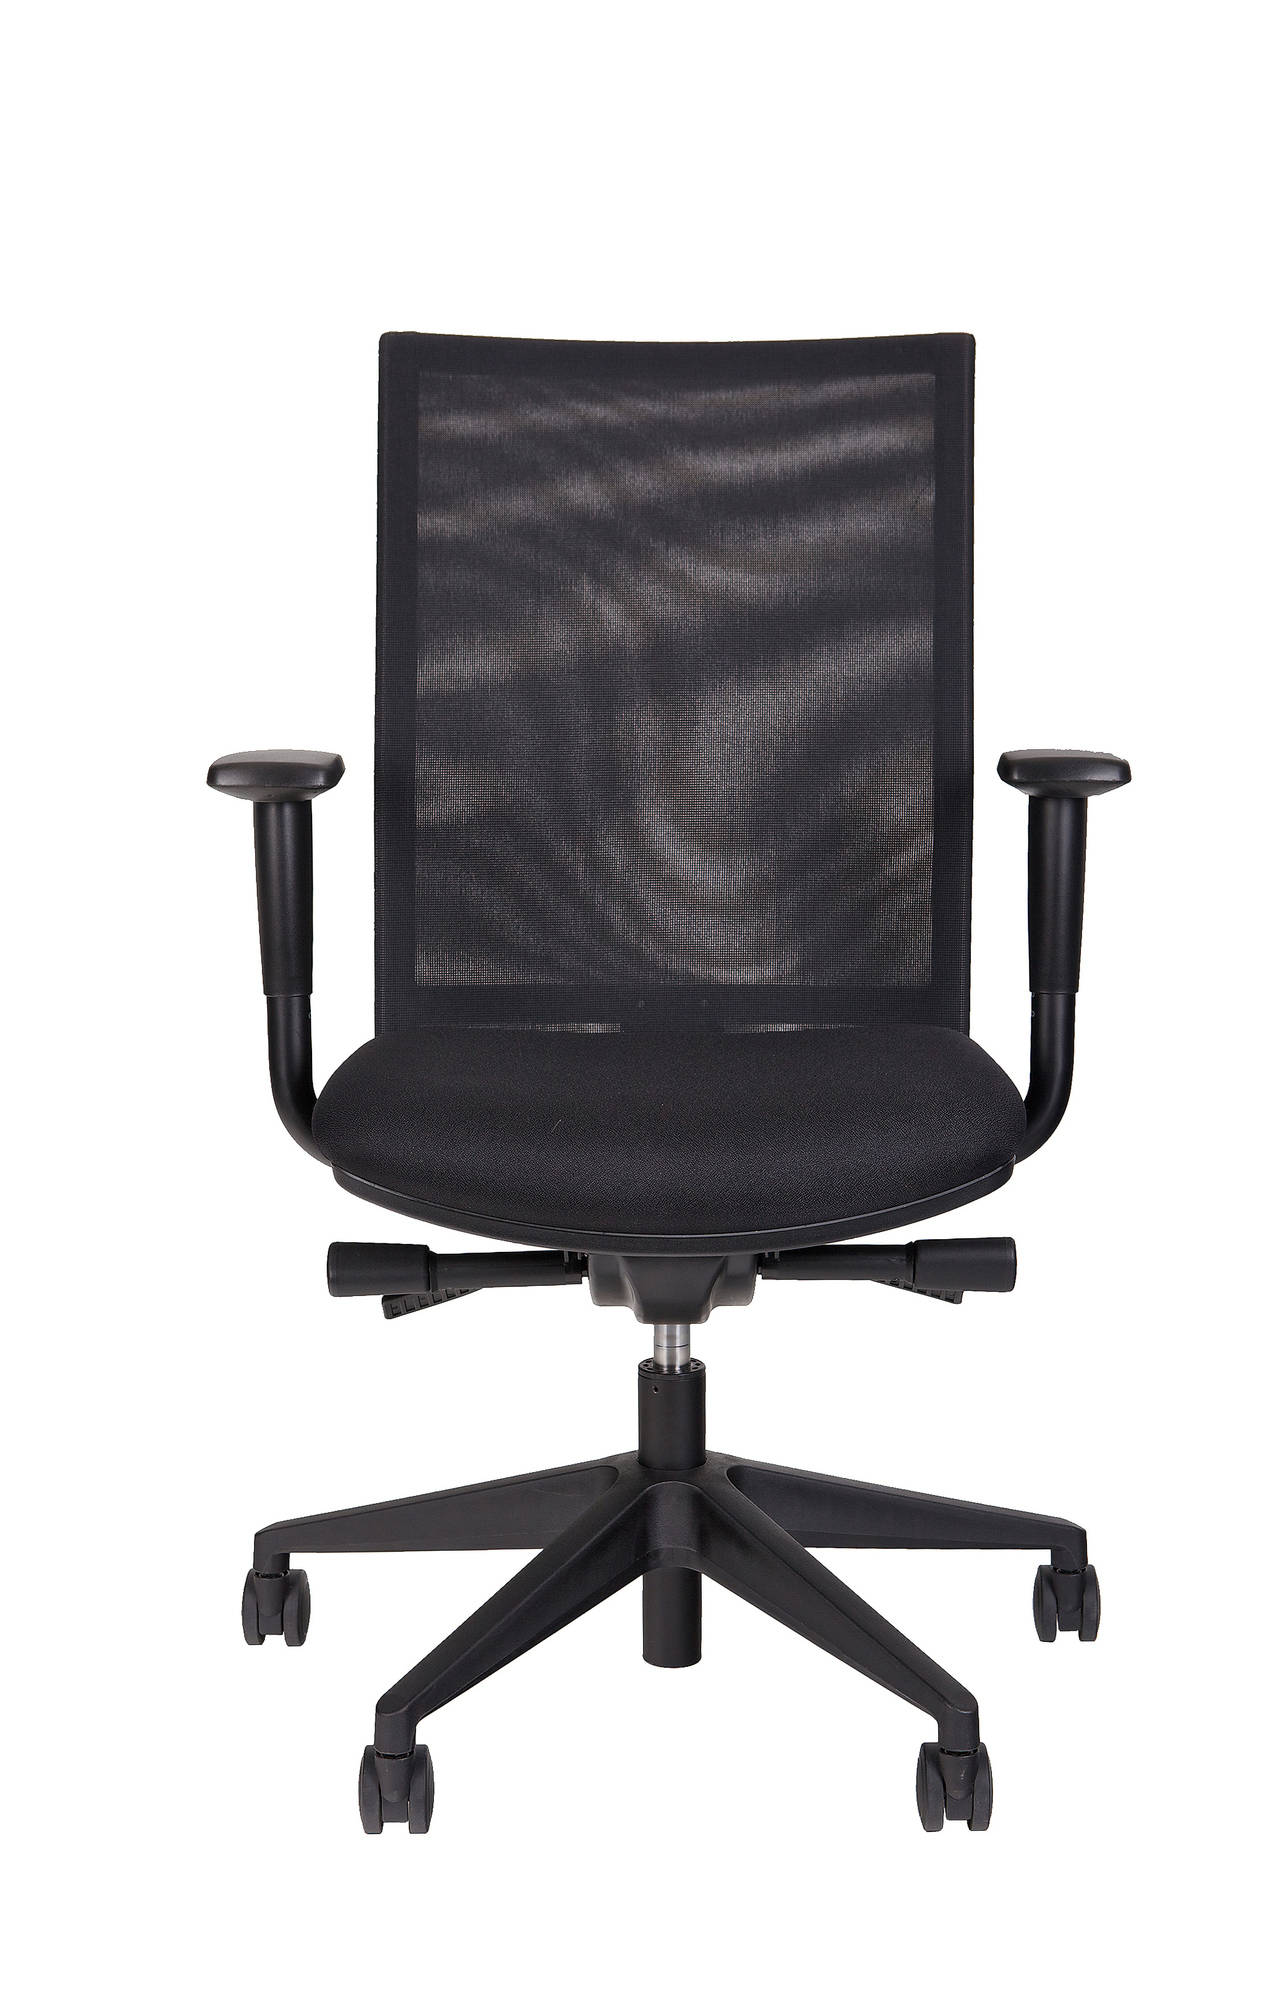 Black ergonomic office chair Cordoba mesh